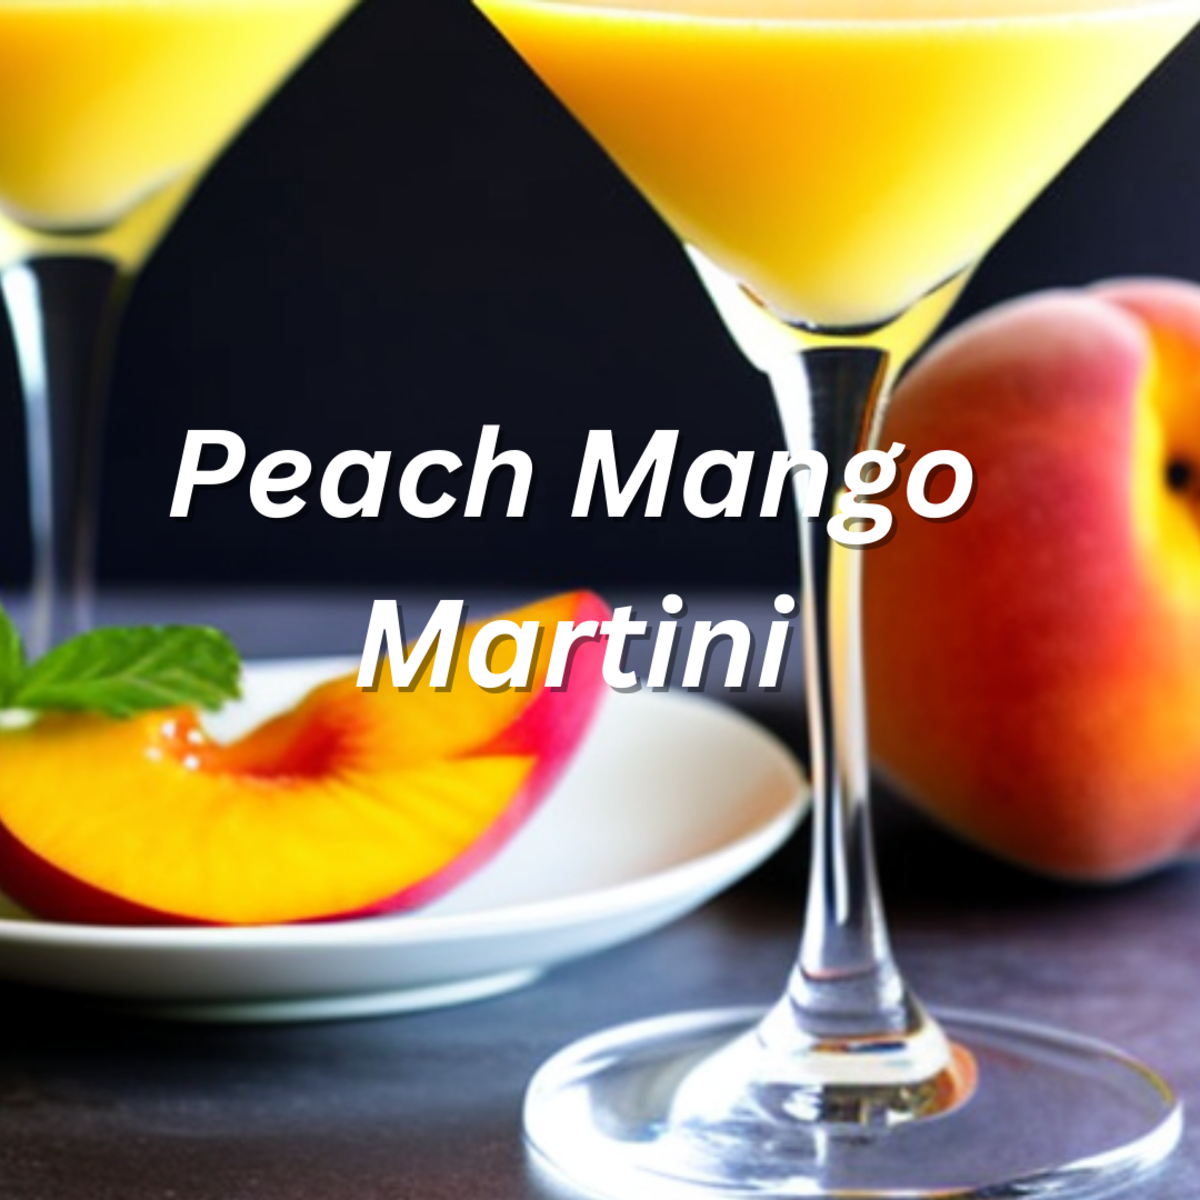 Peach Mango Martini